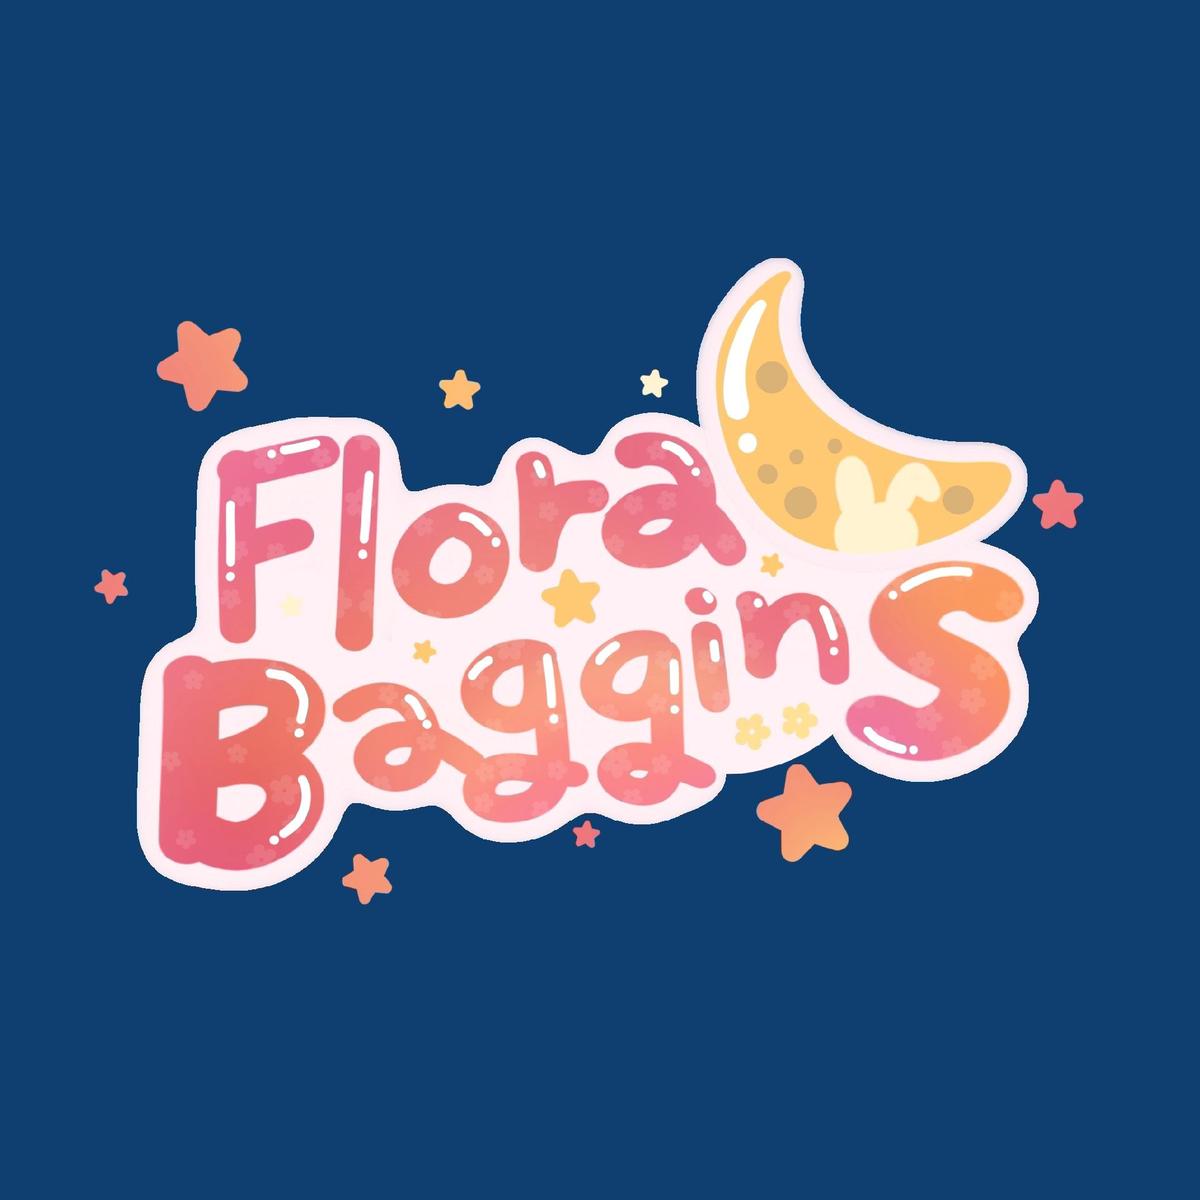 Flora C.baggins